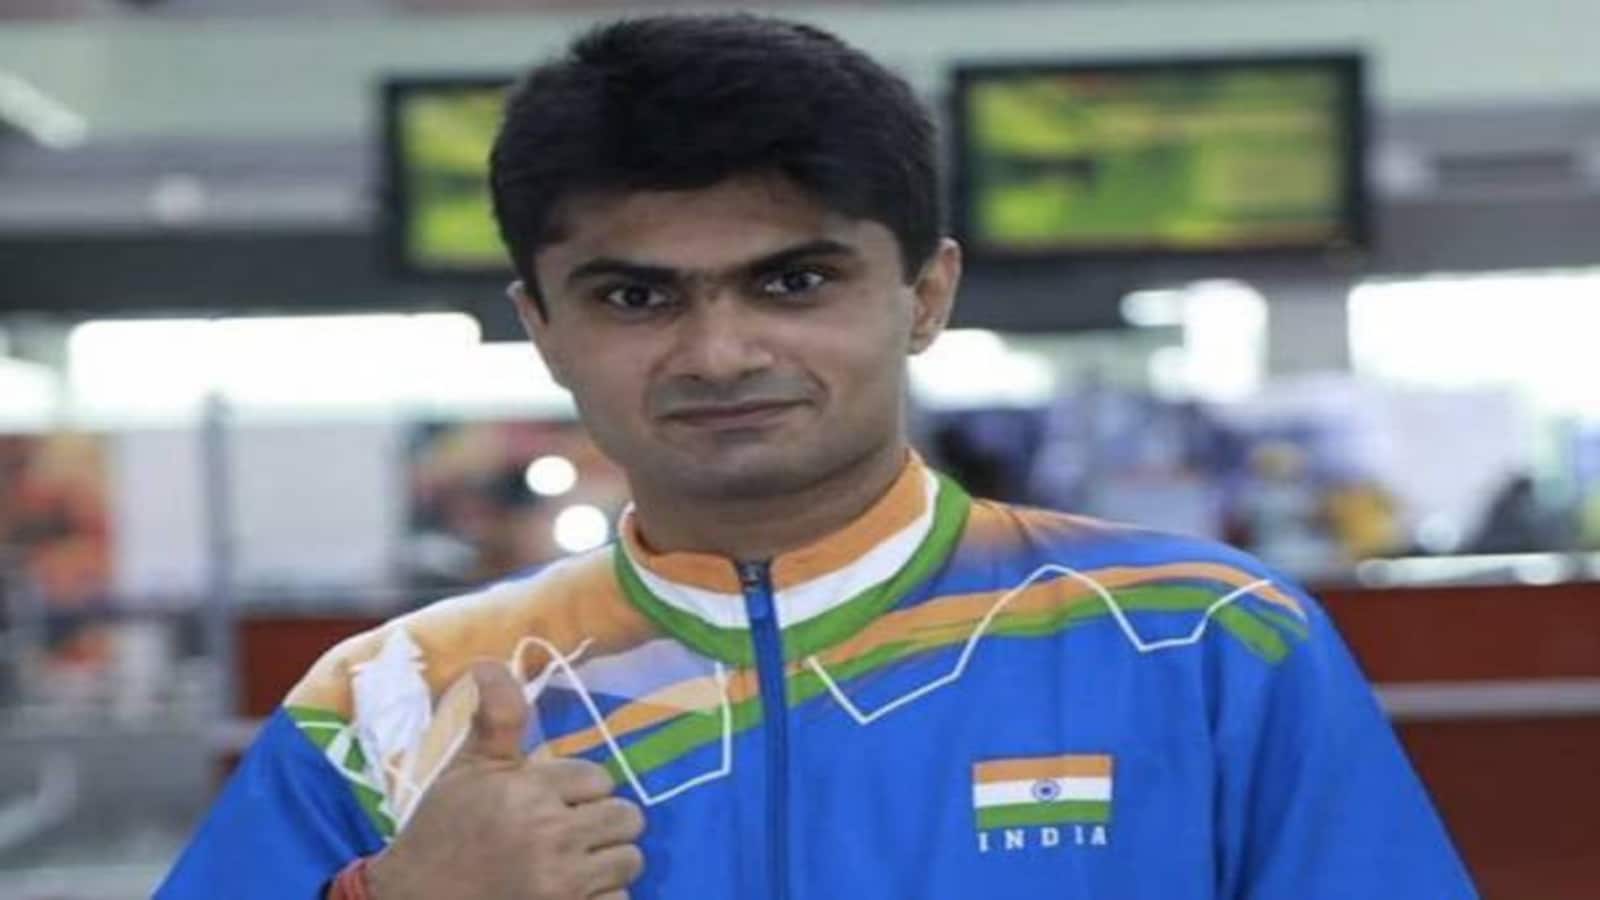 Thailand Para Badminton: Former Noida DM IAS officer SL Yathiraj creates history, wins gold medal